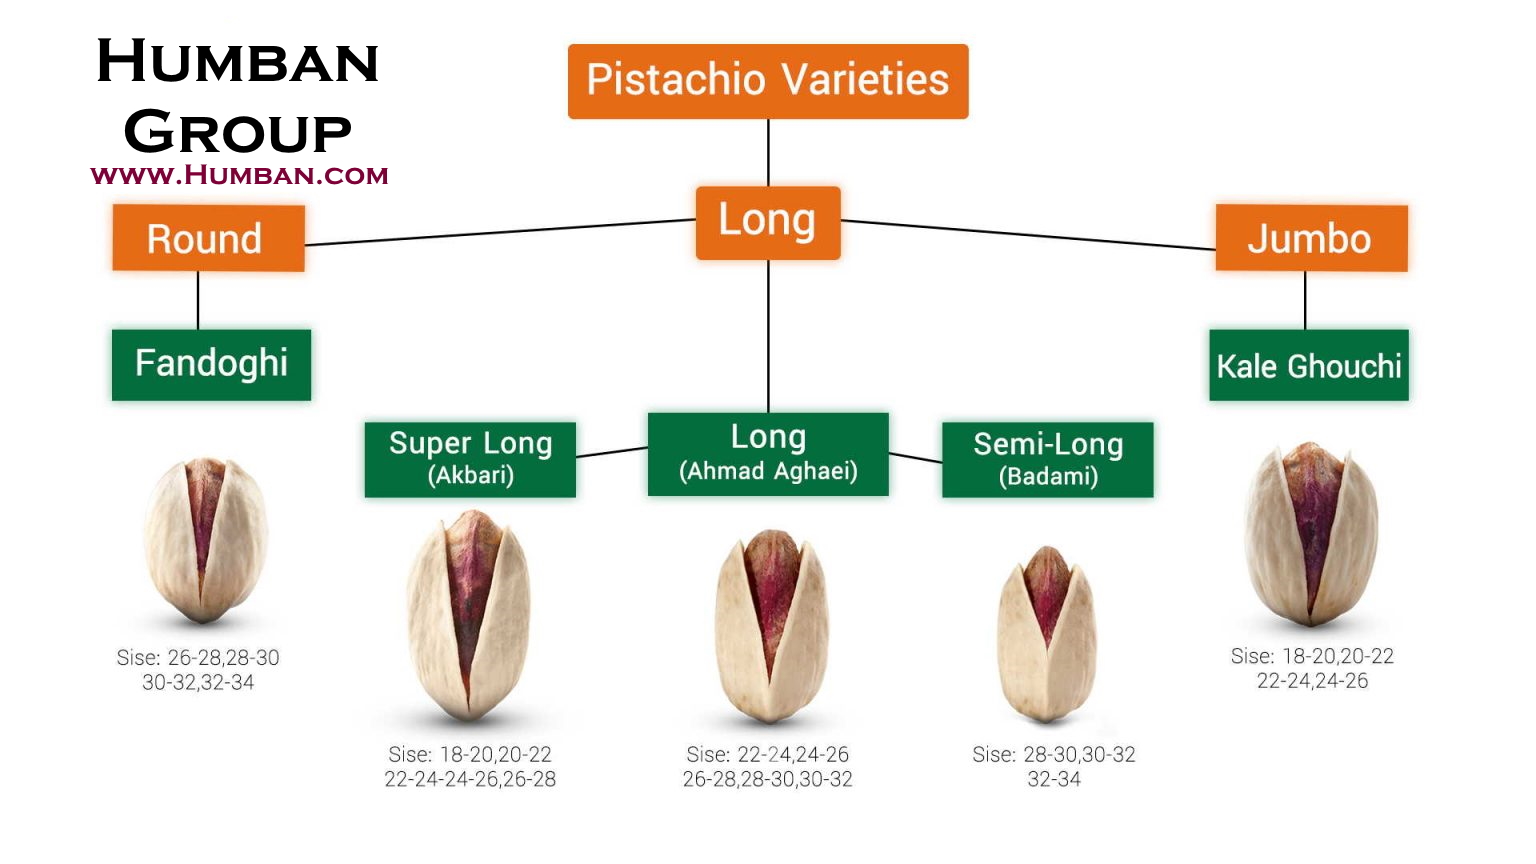 Pistachios varieties